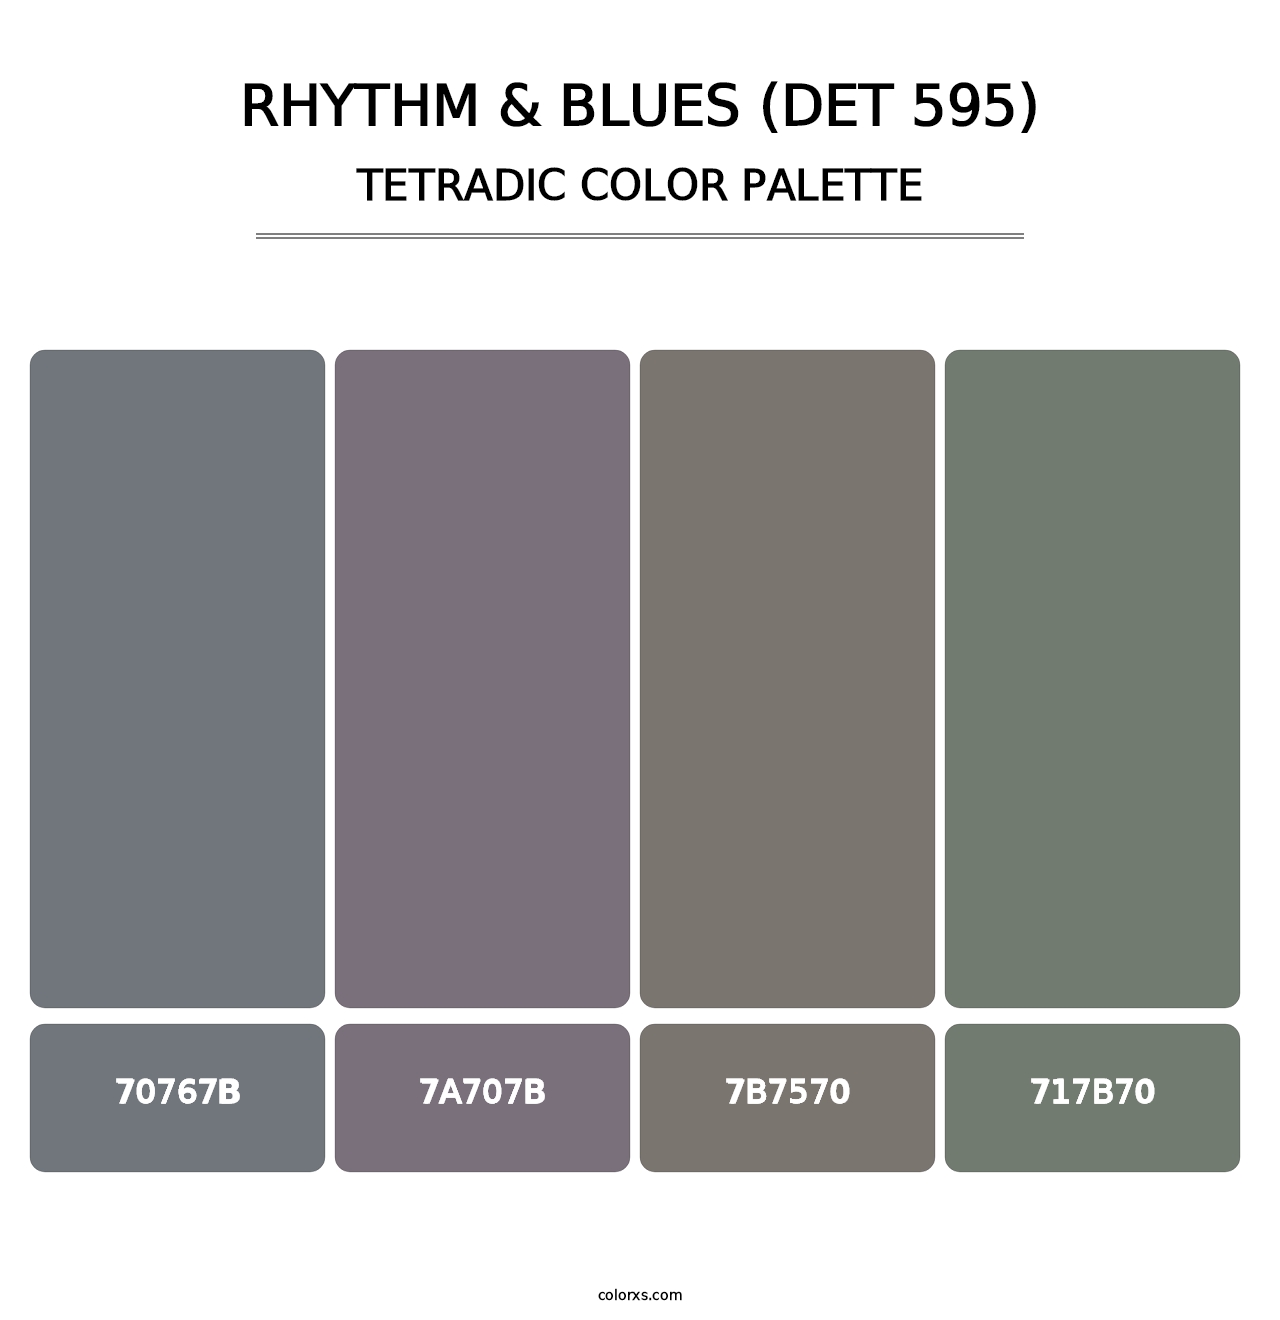 Rhythm & Blues (DET 595) - Tetradic Color Palette